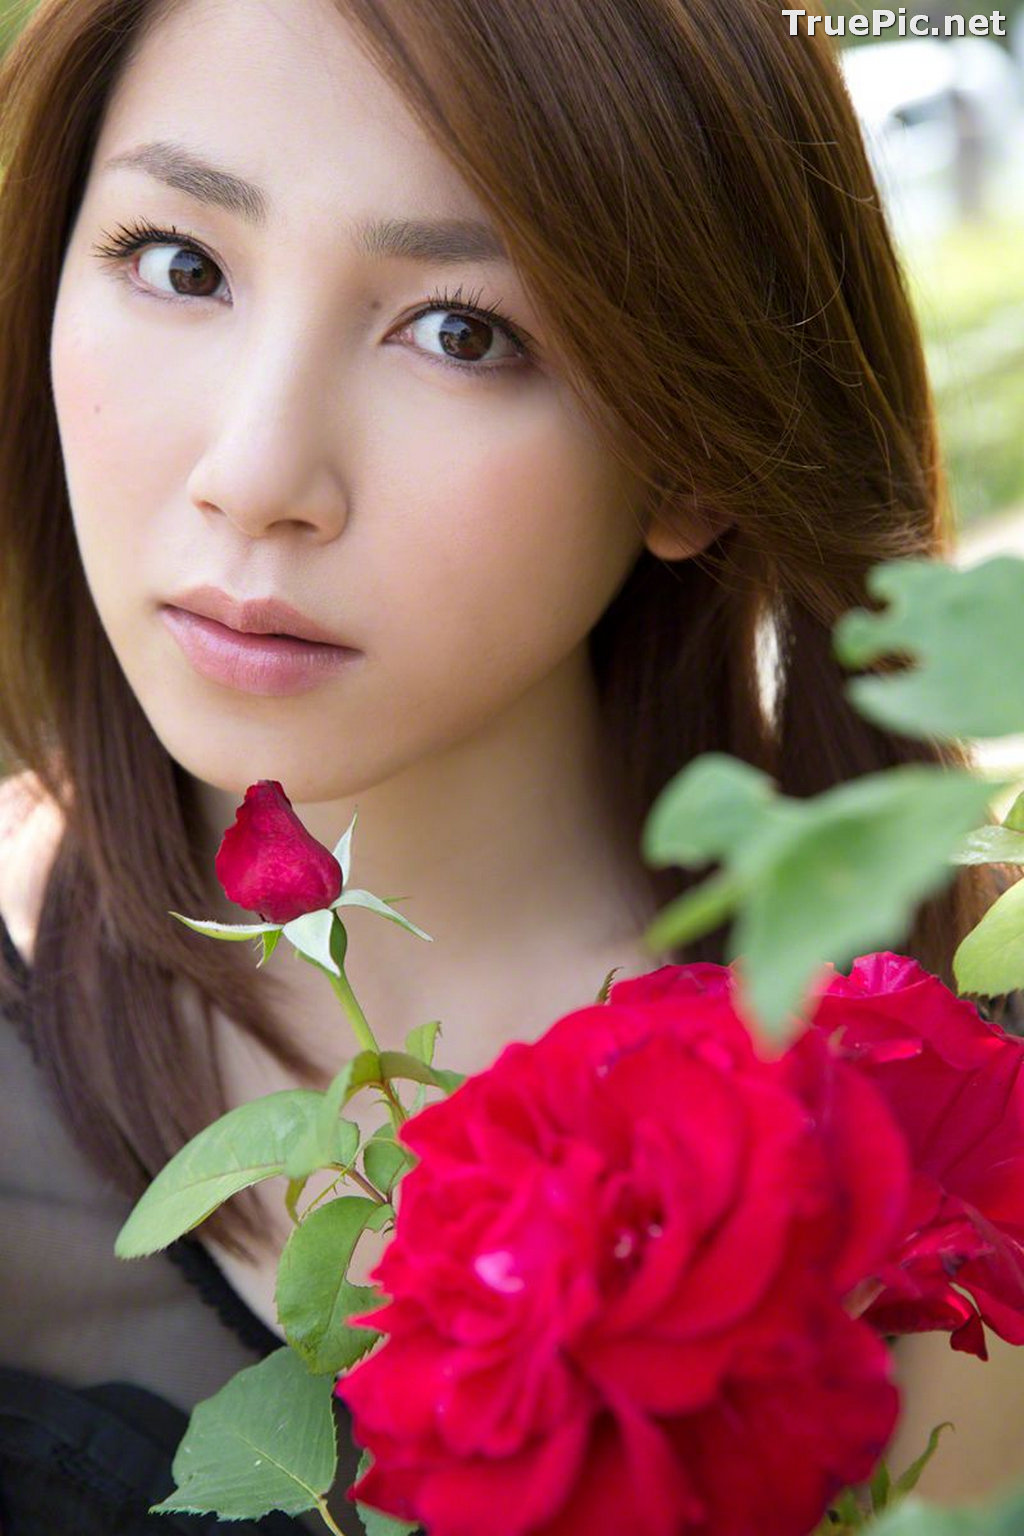 Image [Wanibooks Jacket] No.129 - Japanese Singer and Actress - You Kikkawa - TruePic.net - Picture-13